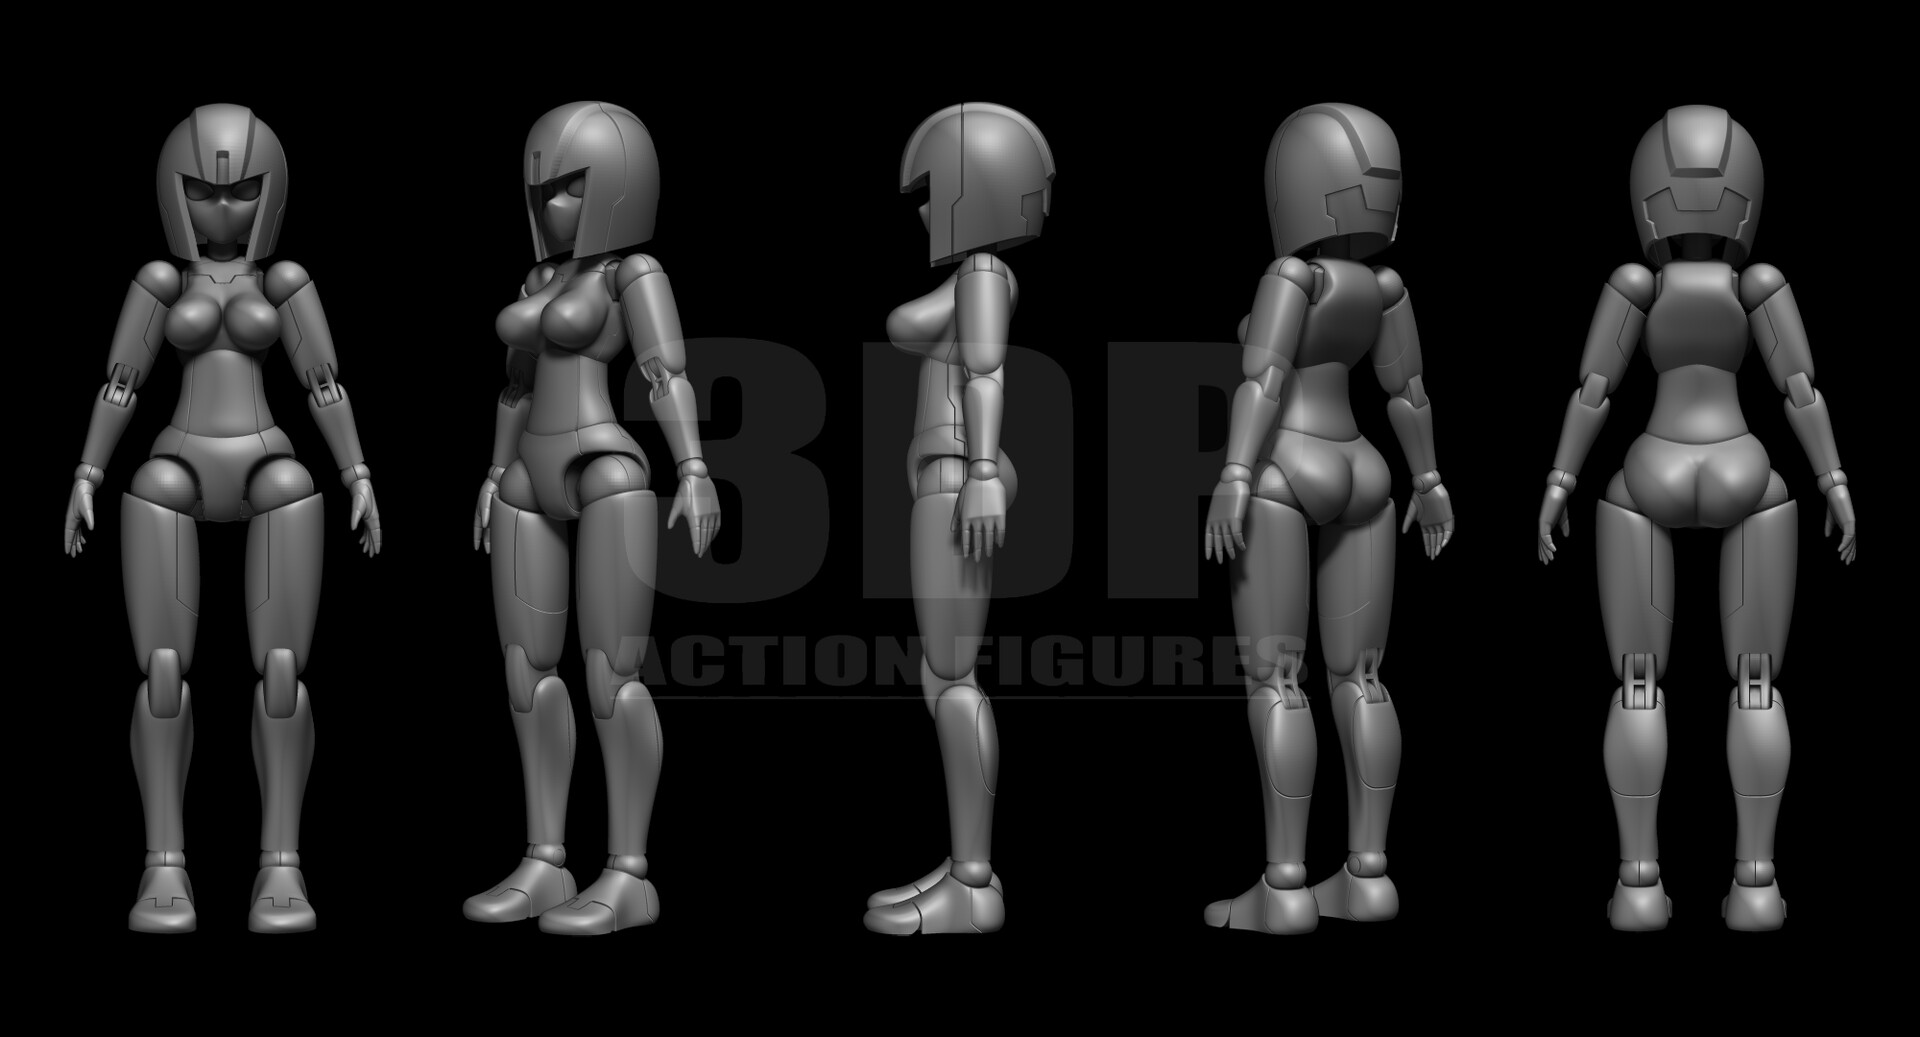 Chibi cyborg girl stock vector. Illustration of lady - 49878180